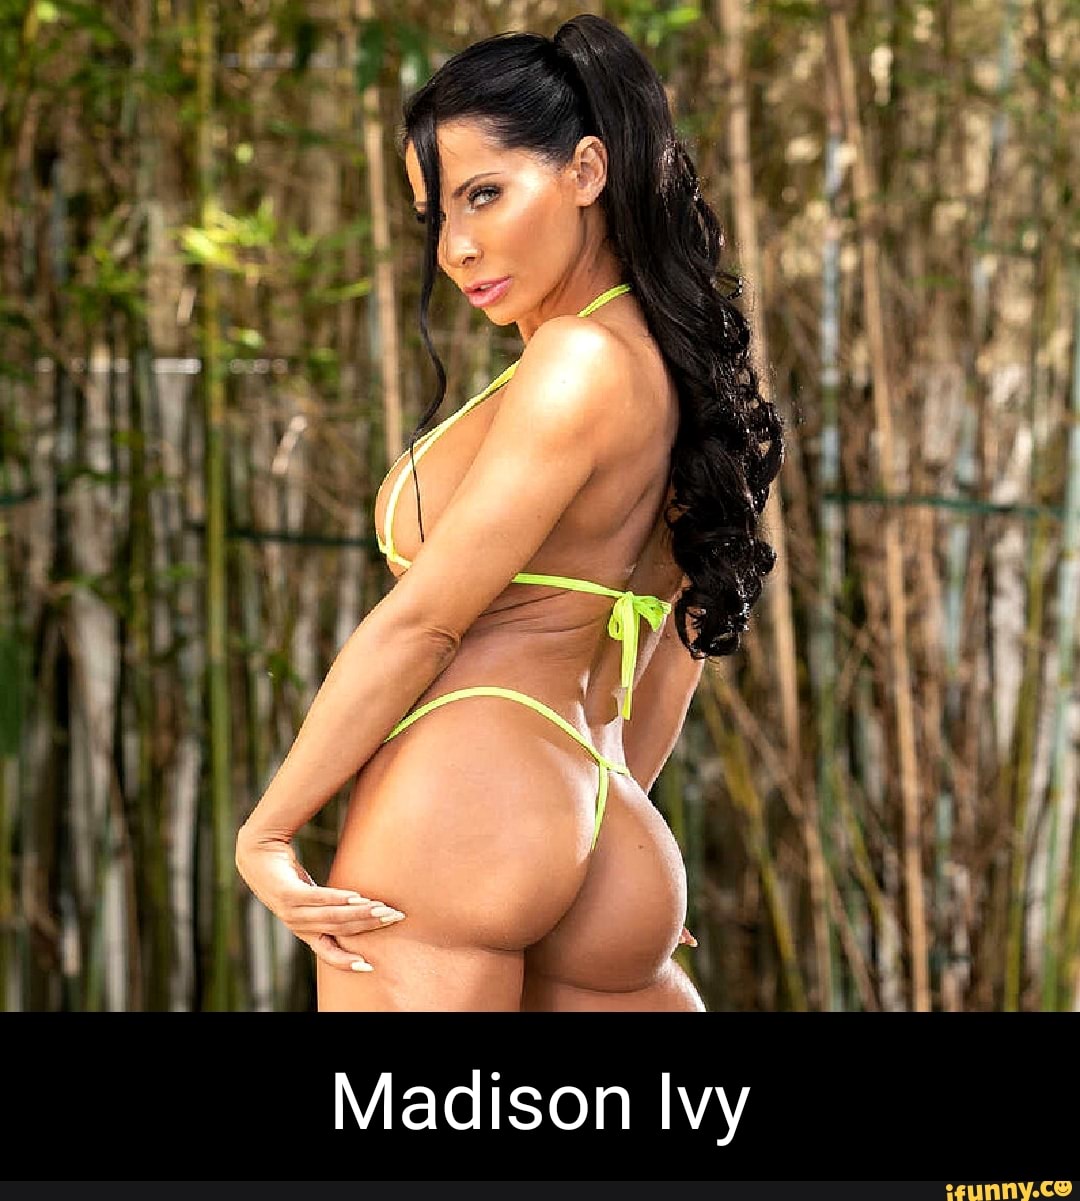 Maddison ivy